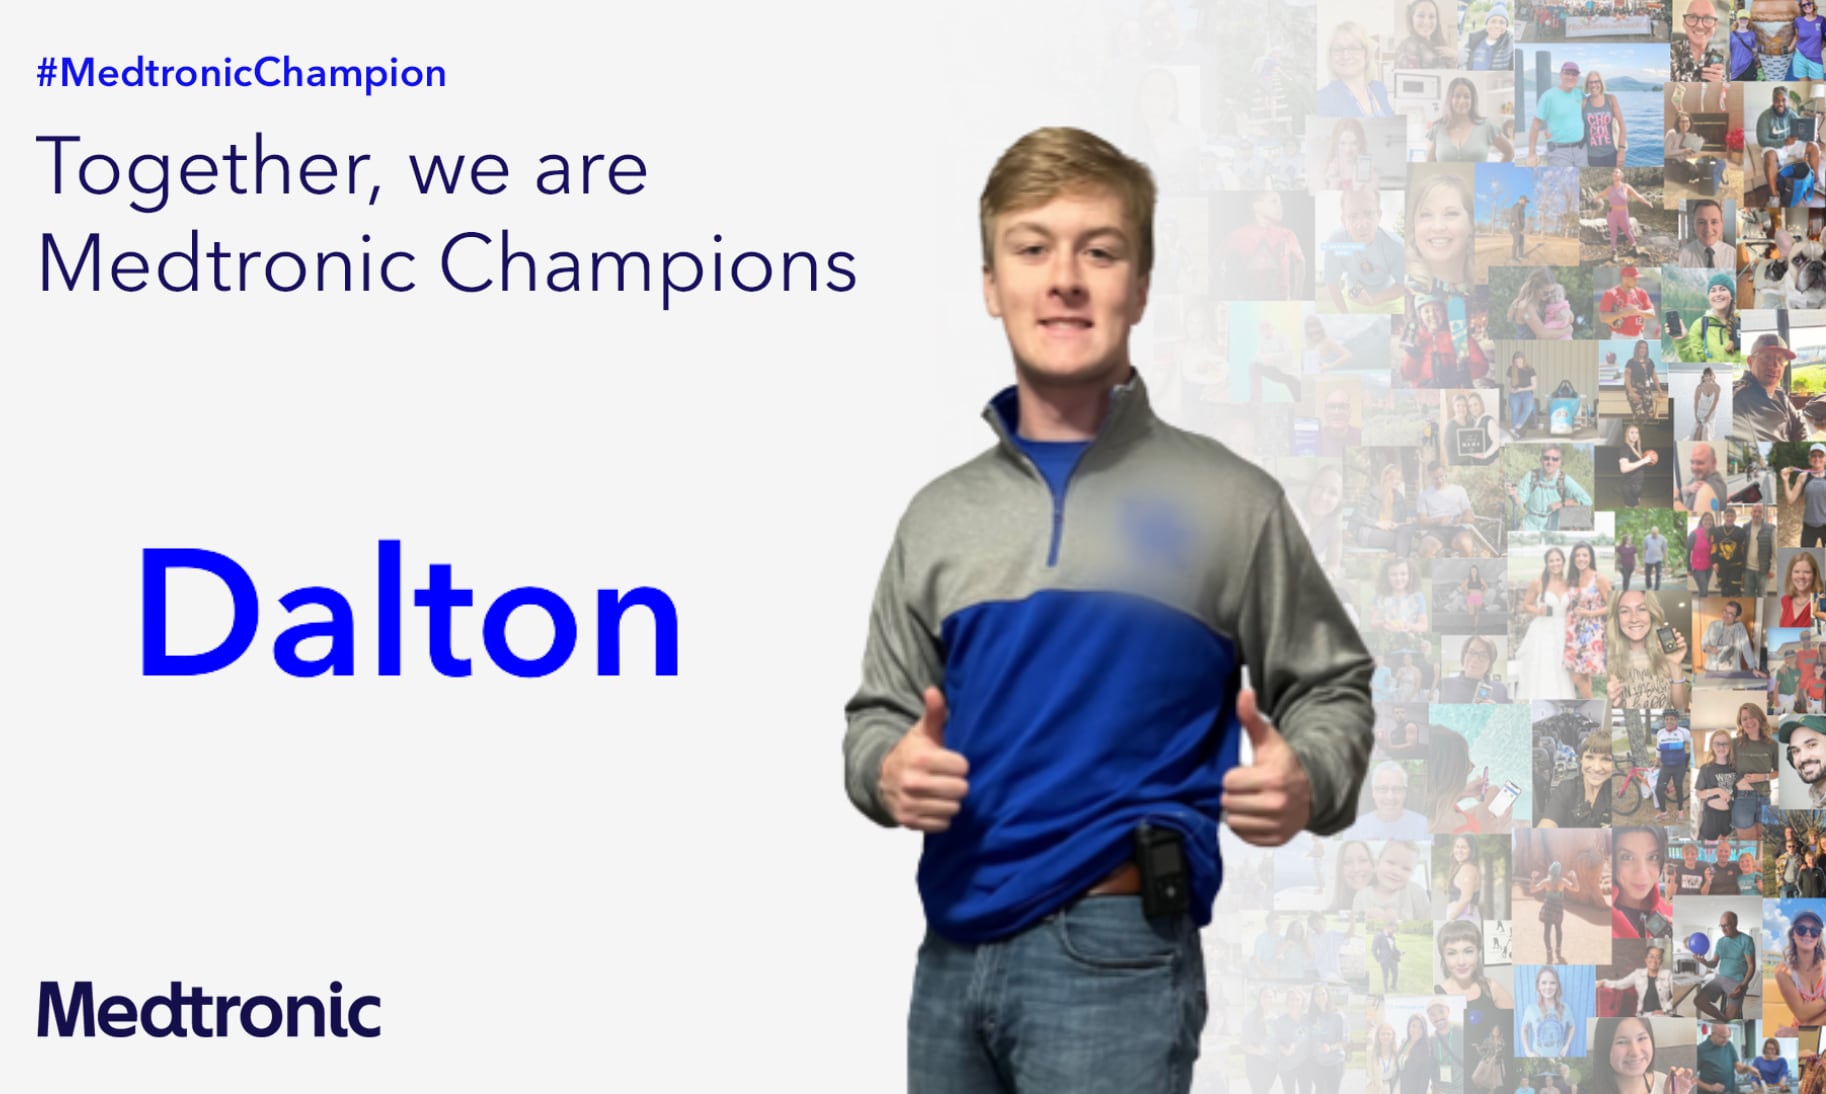 Meet #MedtronicChampion Dalton